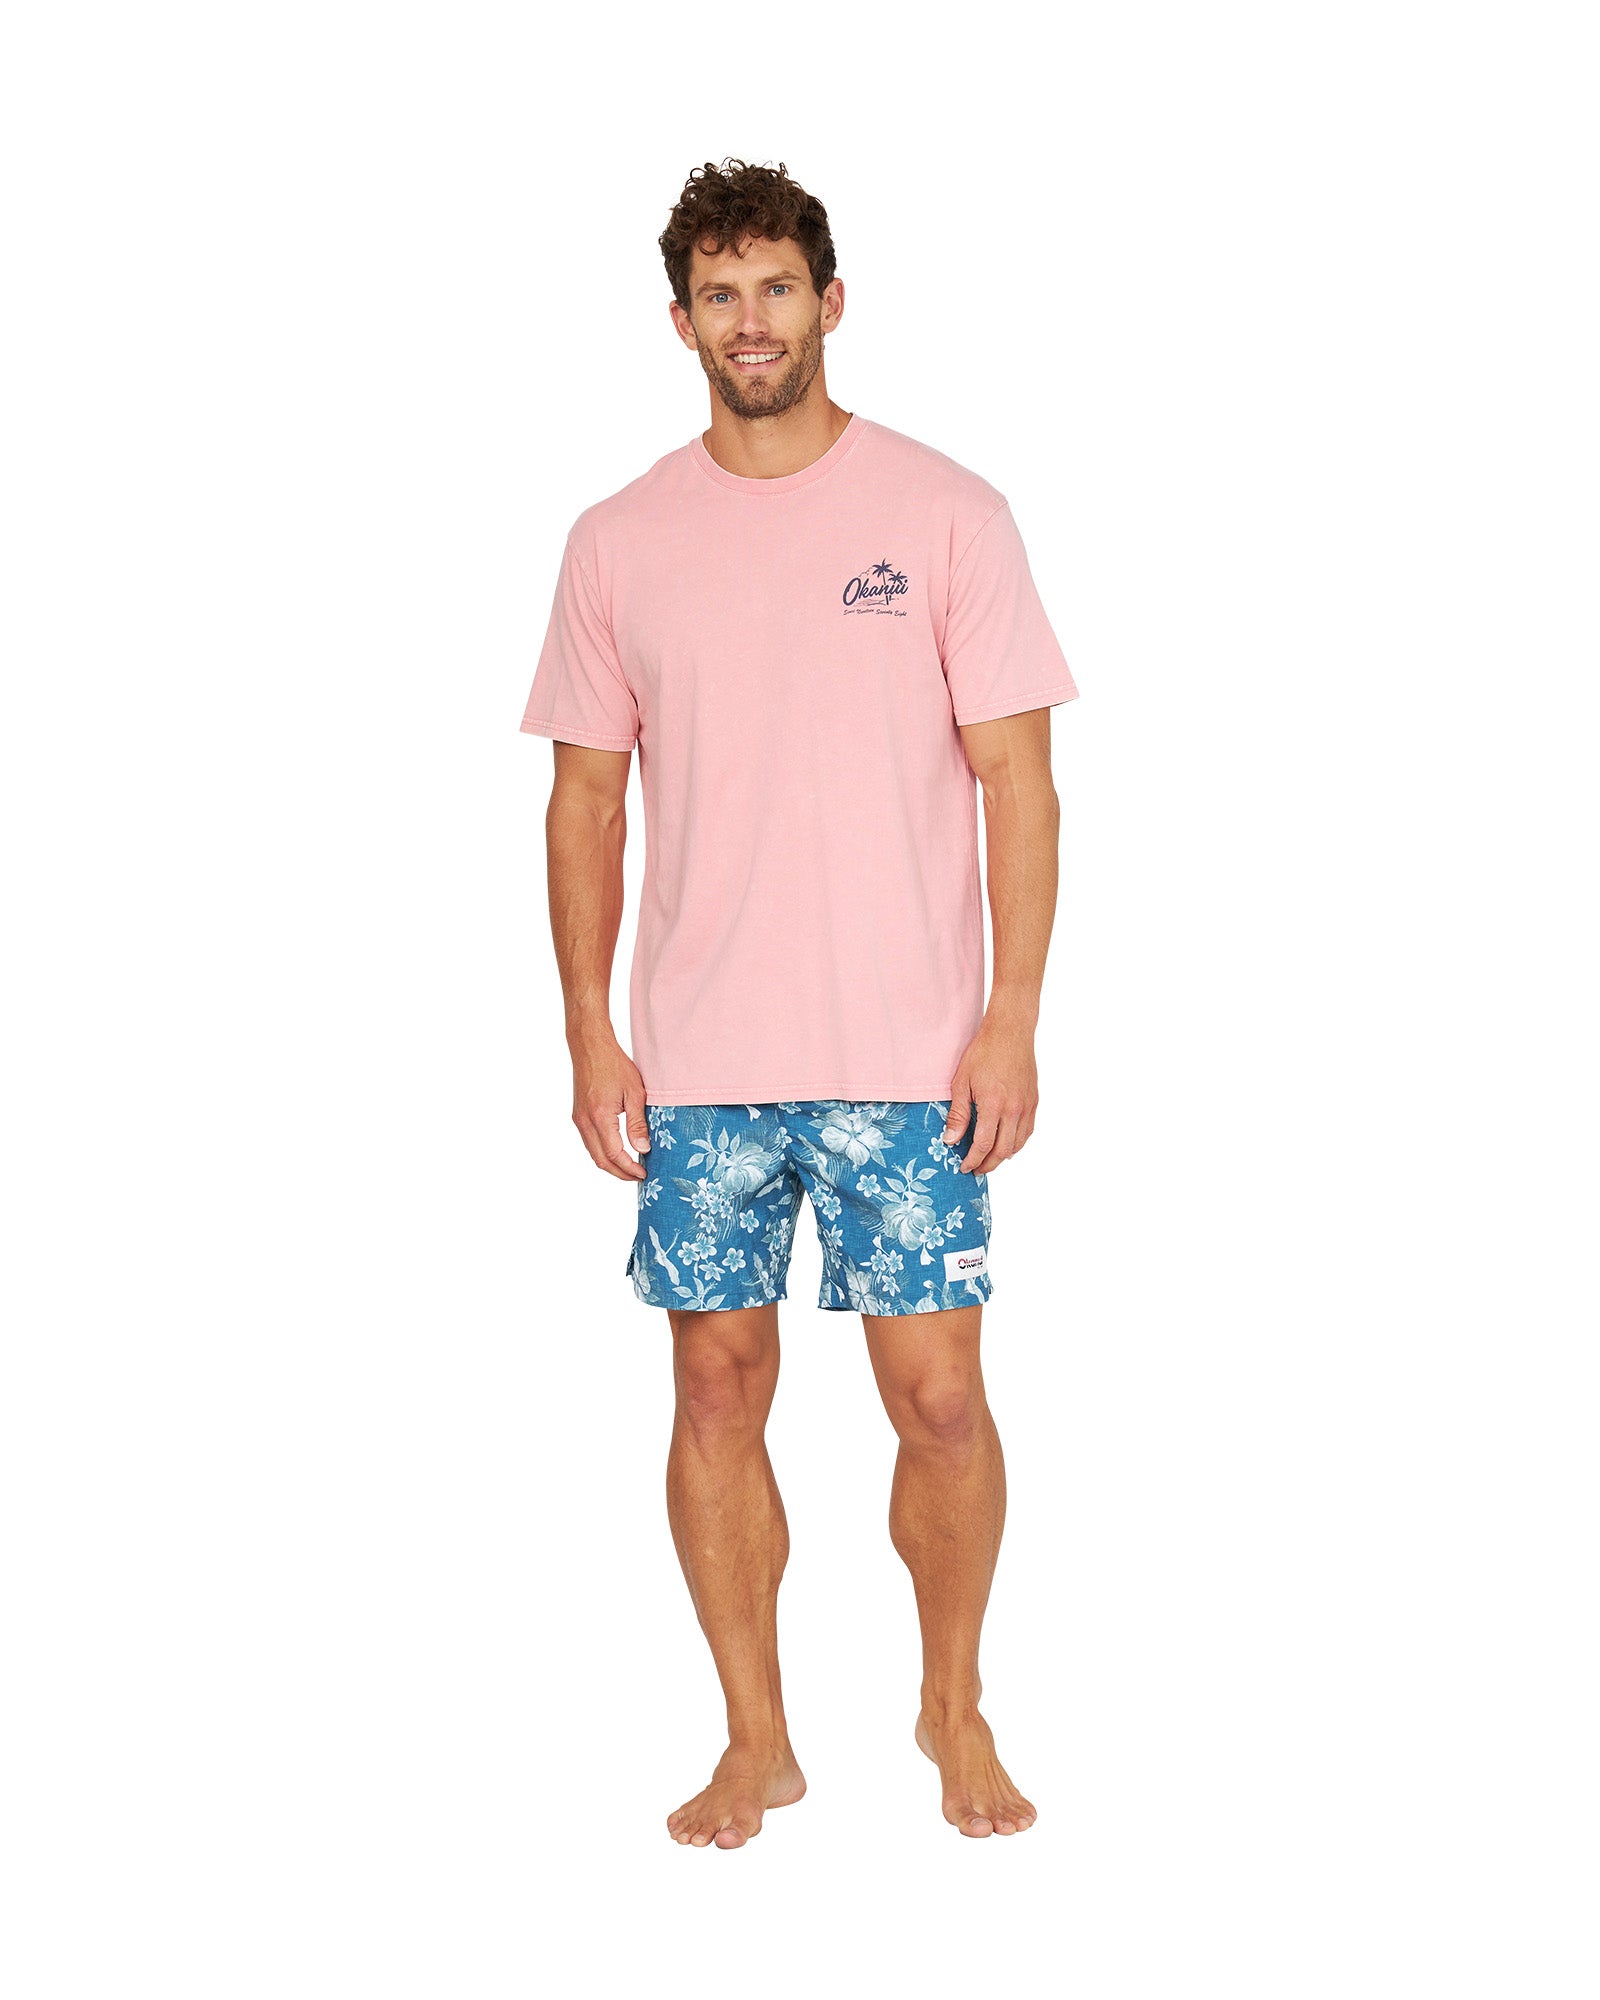 Mens - T-Shirt - Postcards - Washed Pink